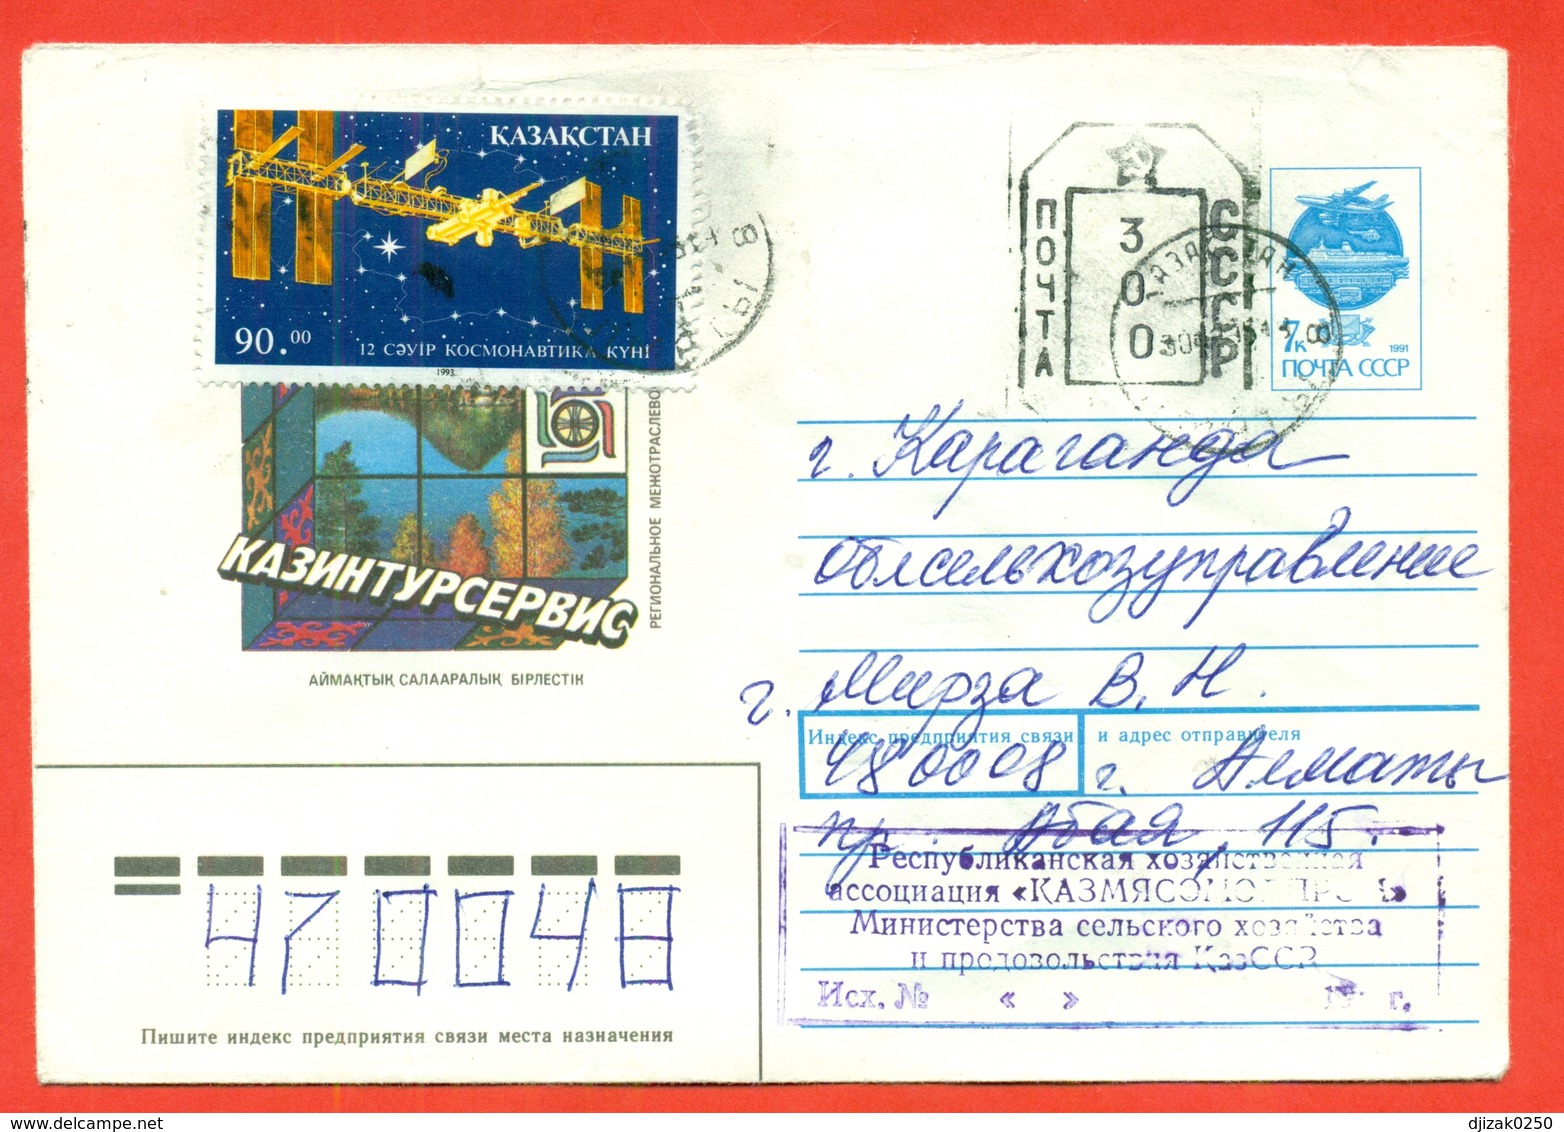 Kazakhstan 1998.Space.The Envelope Is Really Past Mail. - Kazakhstan